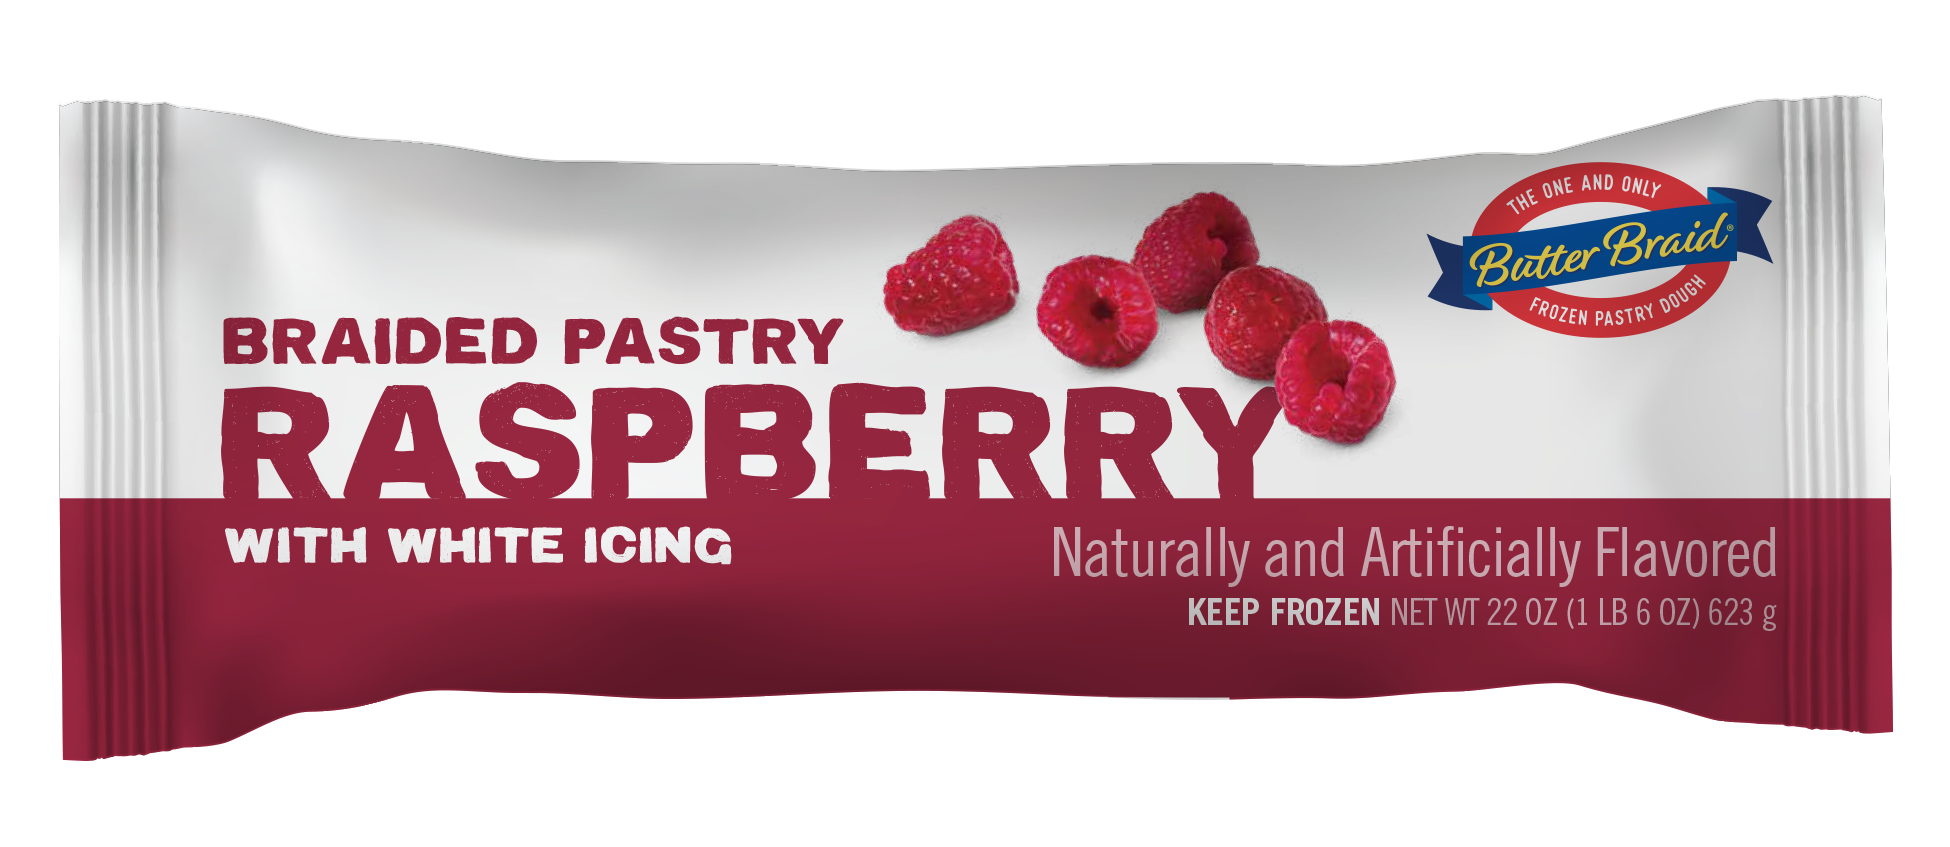 Raspberry Pastry packaging